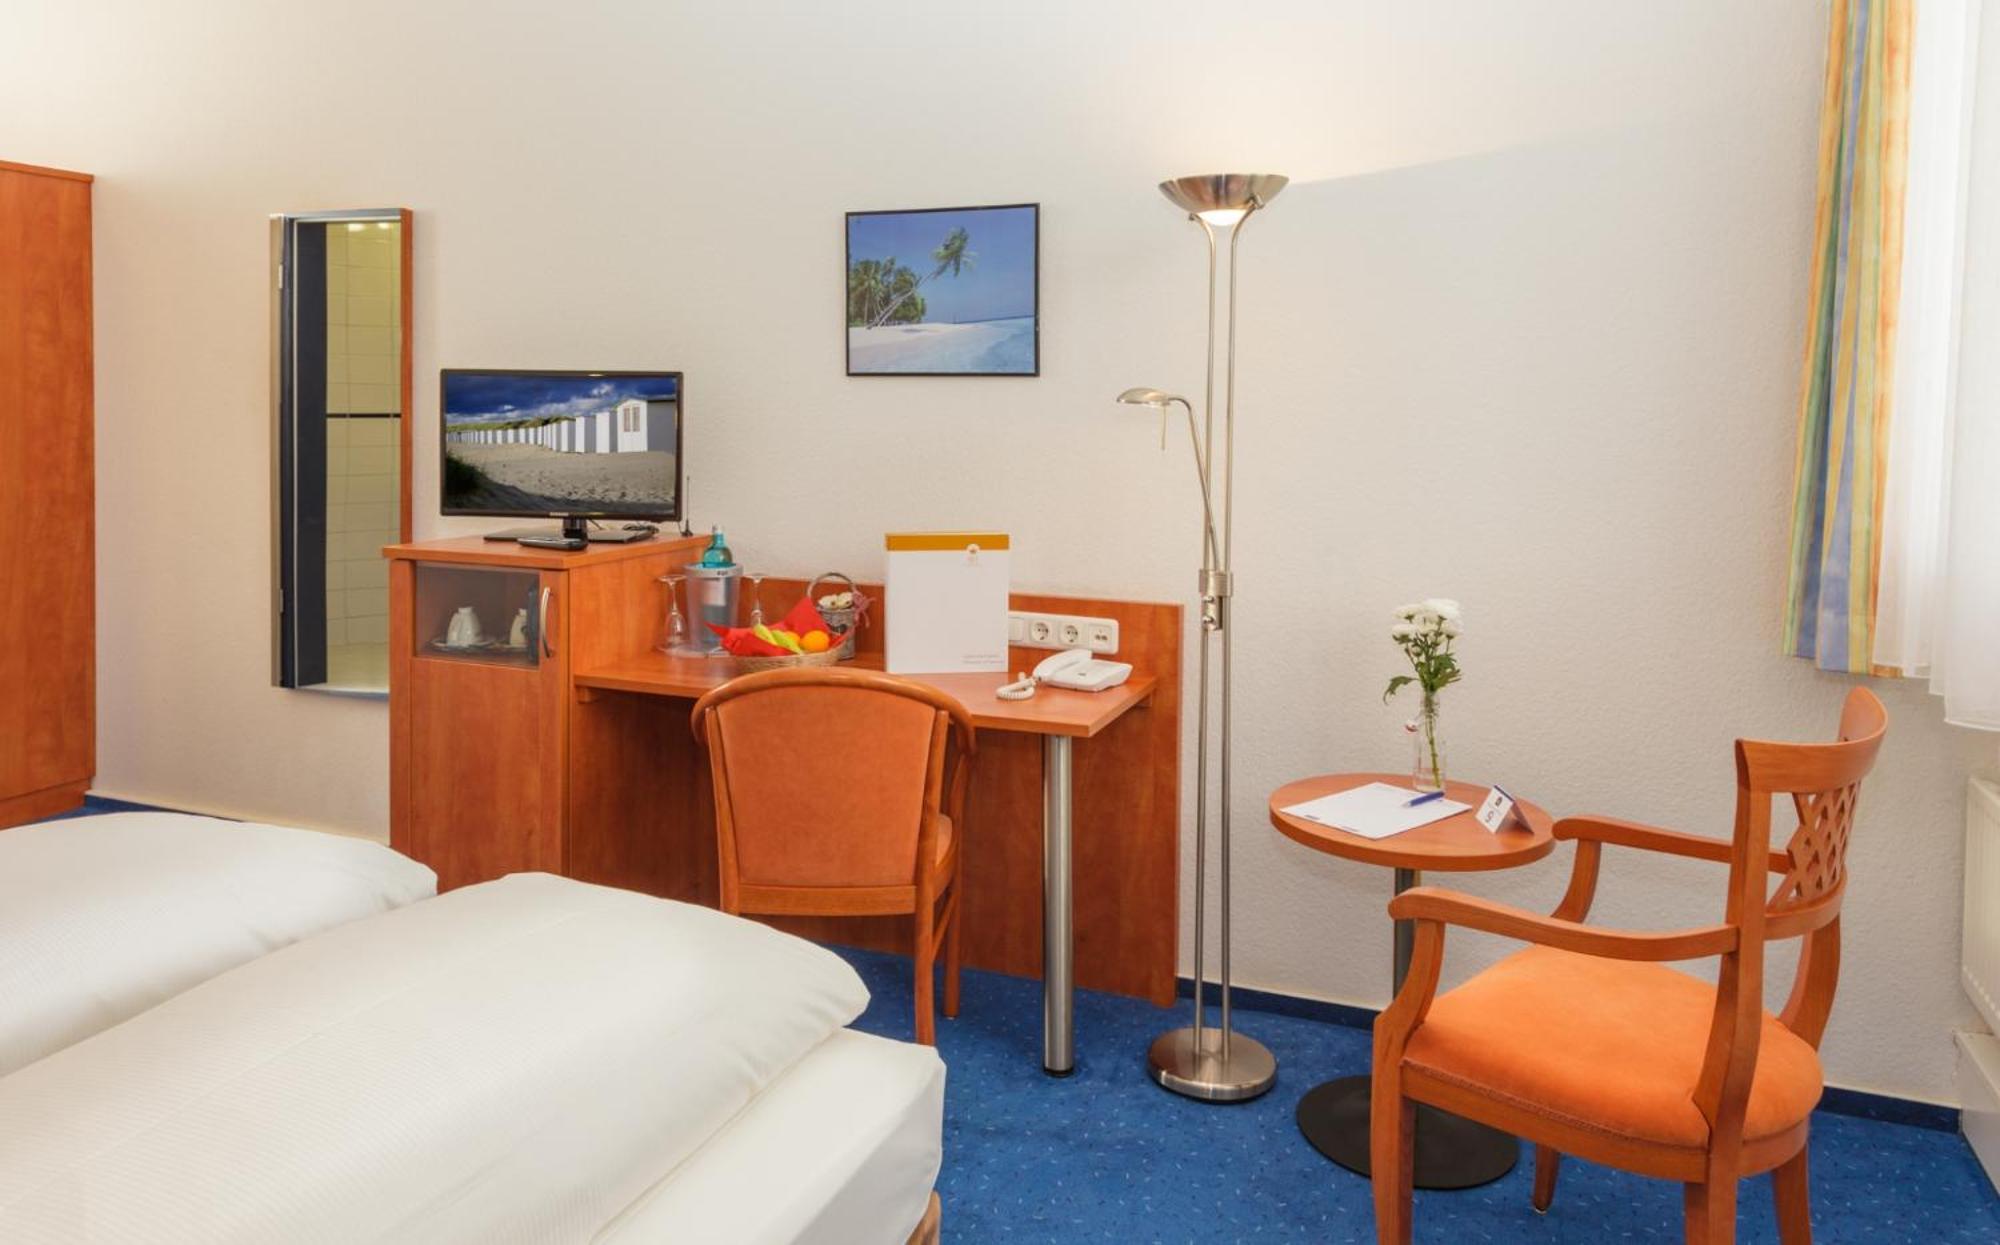 Best Western Comfort Business Hotel Dusseldorf-Neuss Exterior photo